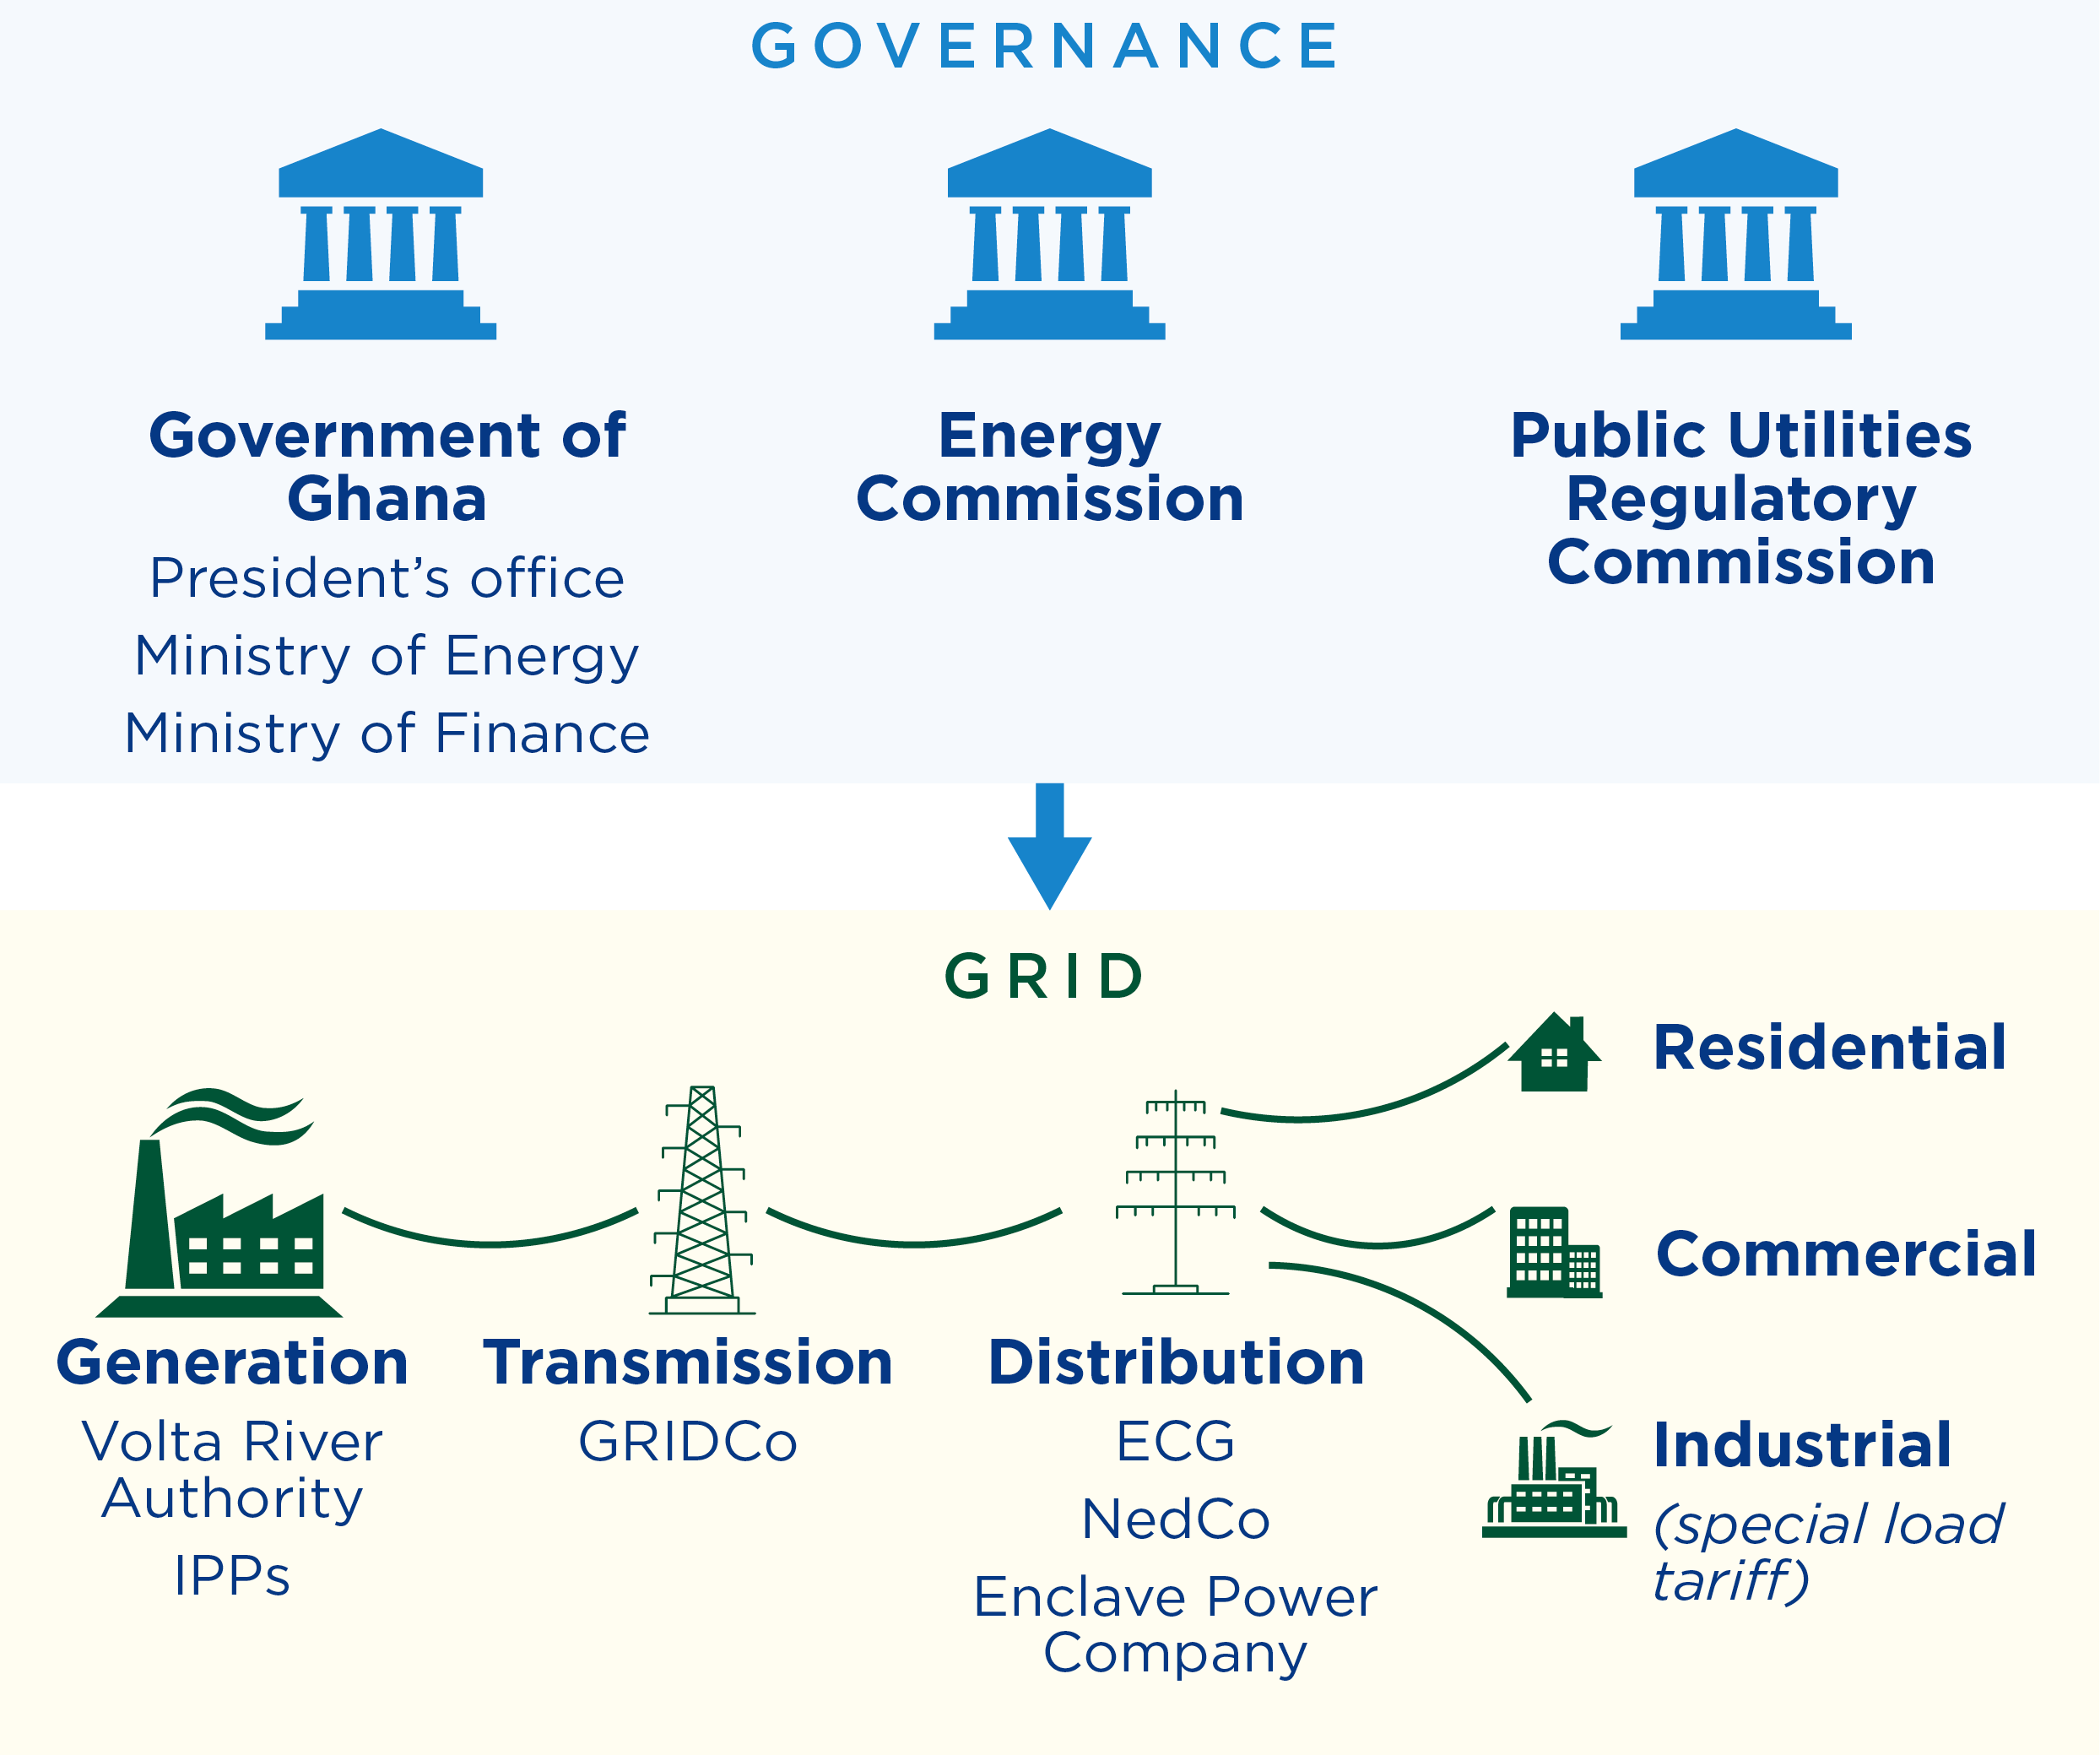 governance actors regulate the power grid